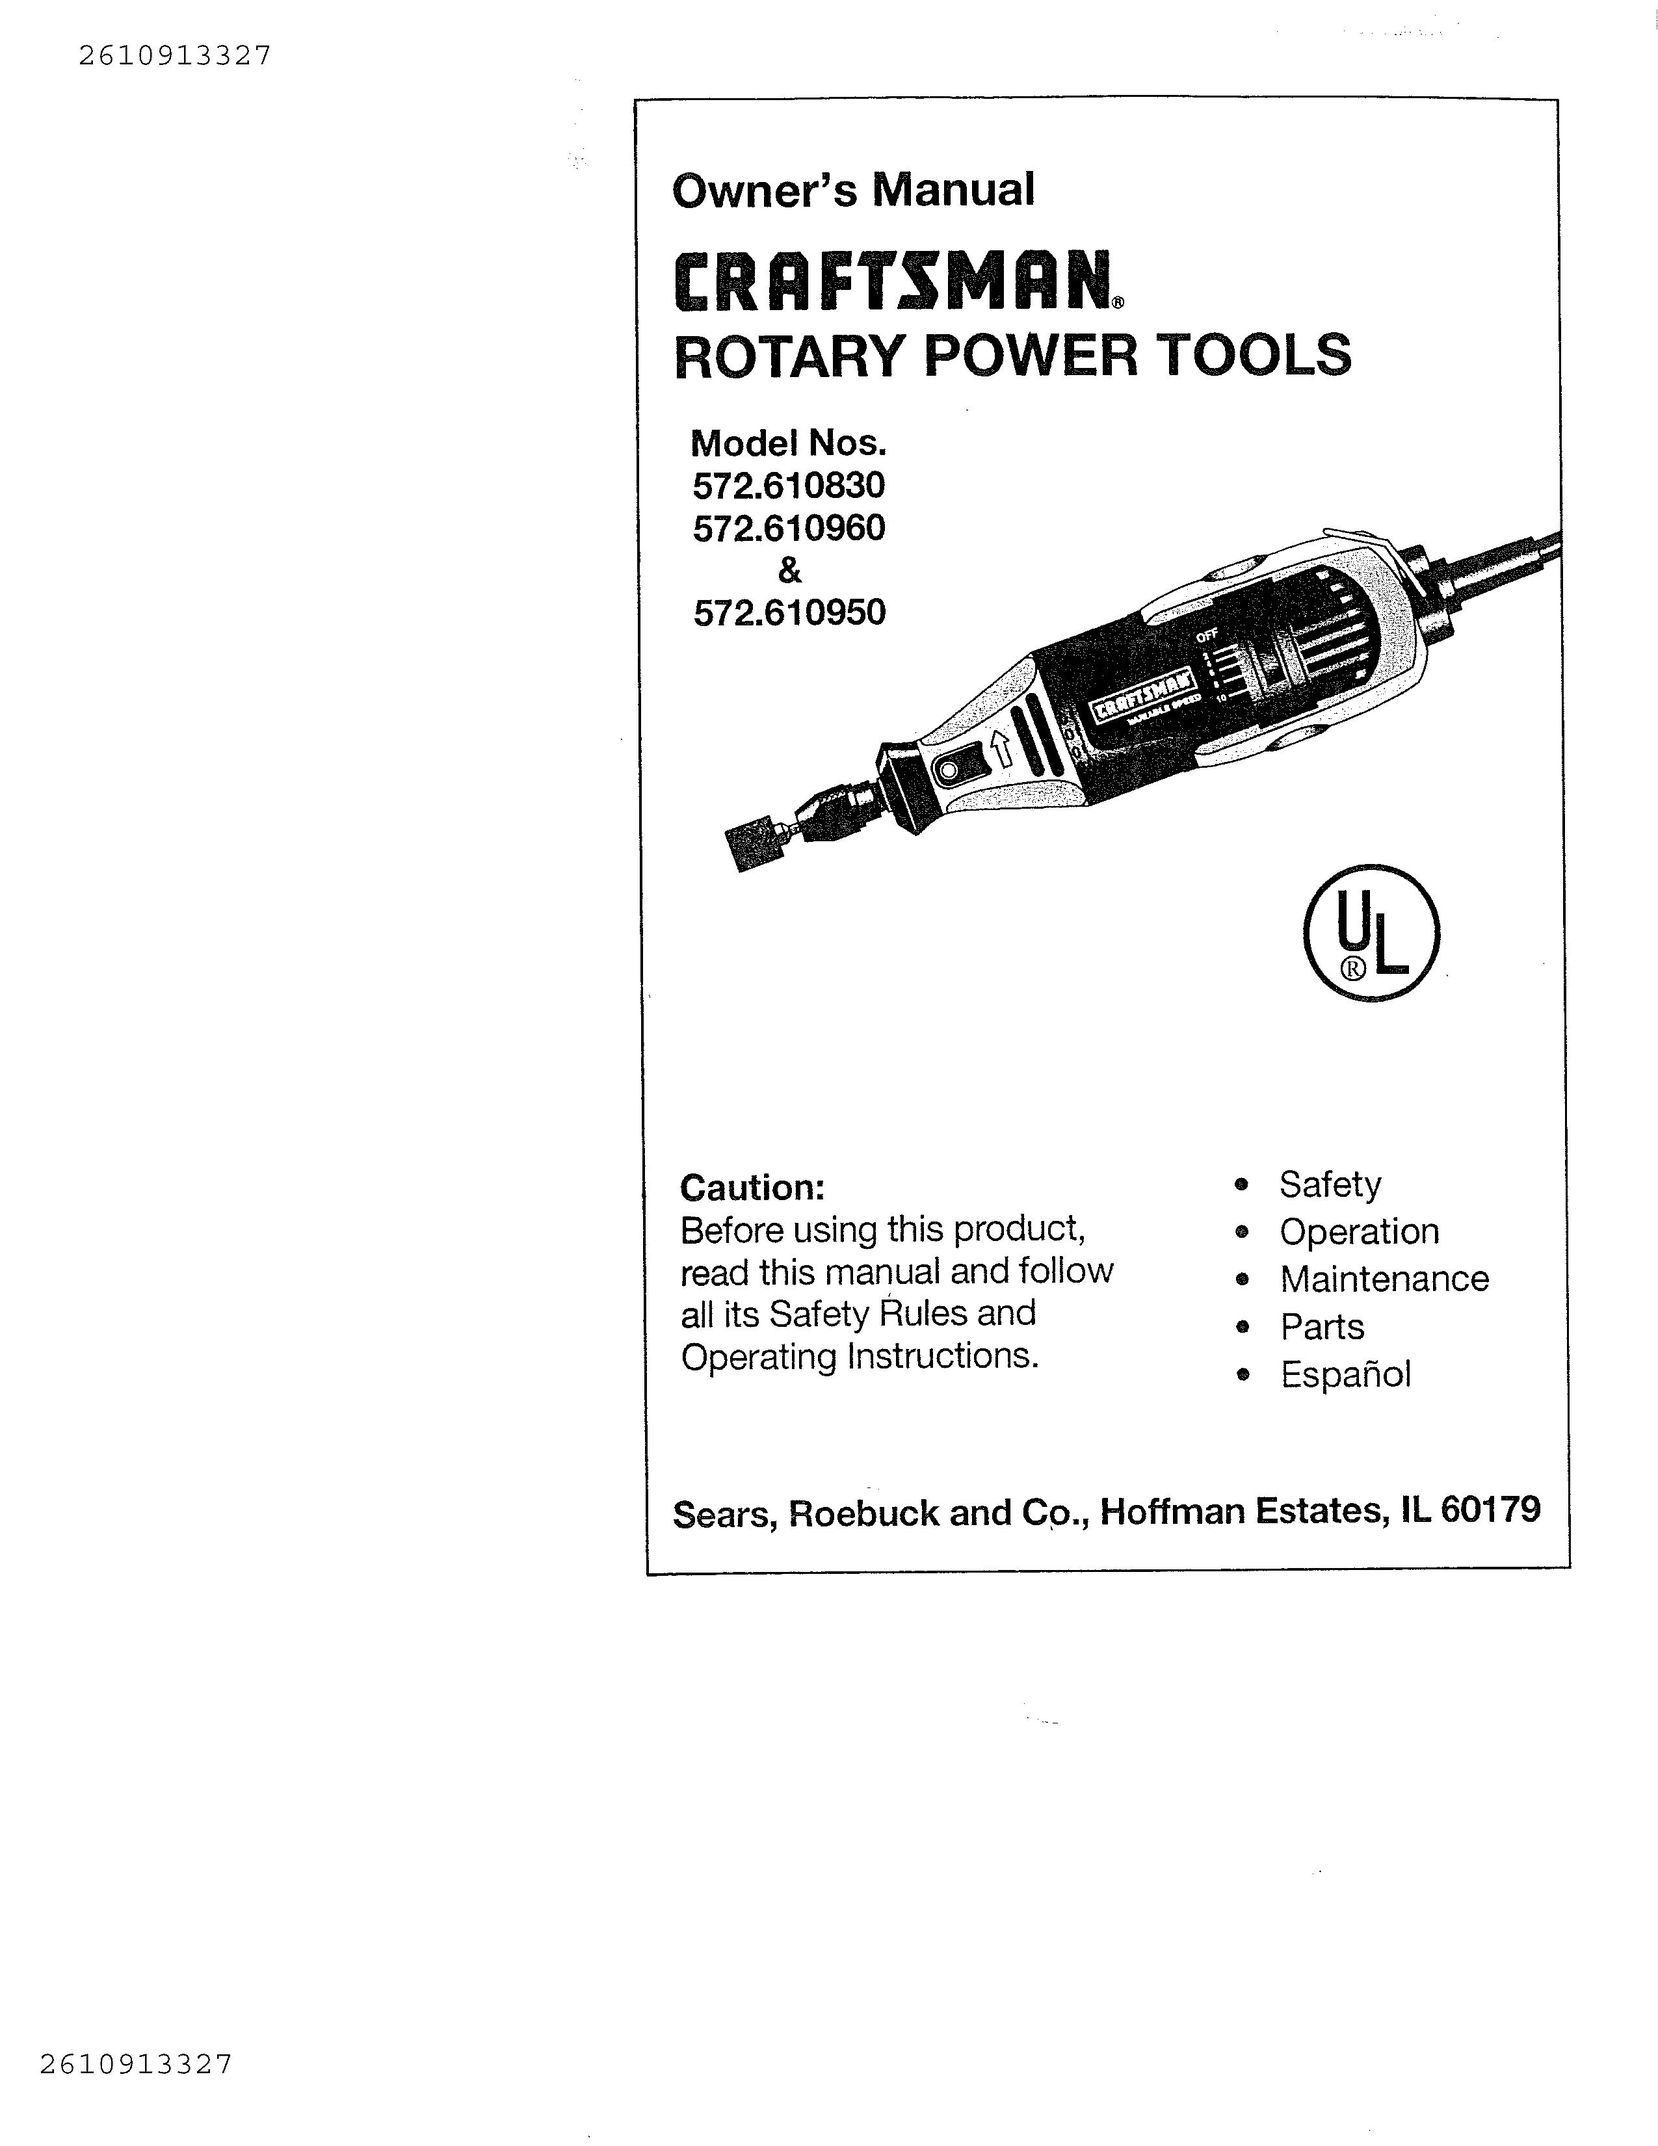 Craftsman 572.61096 Power Hammer User Manual